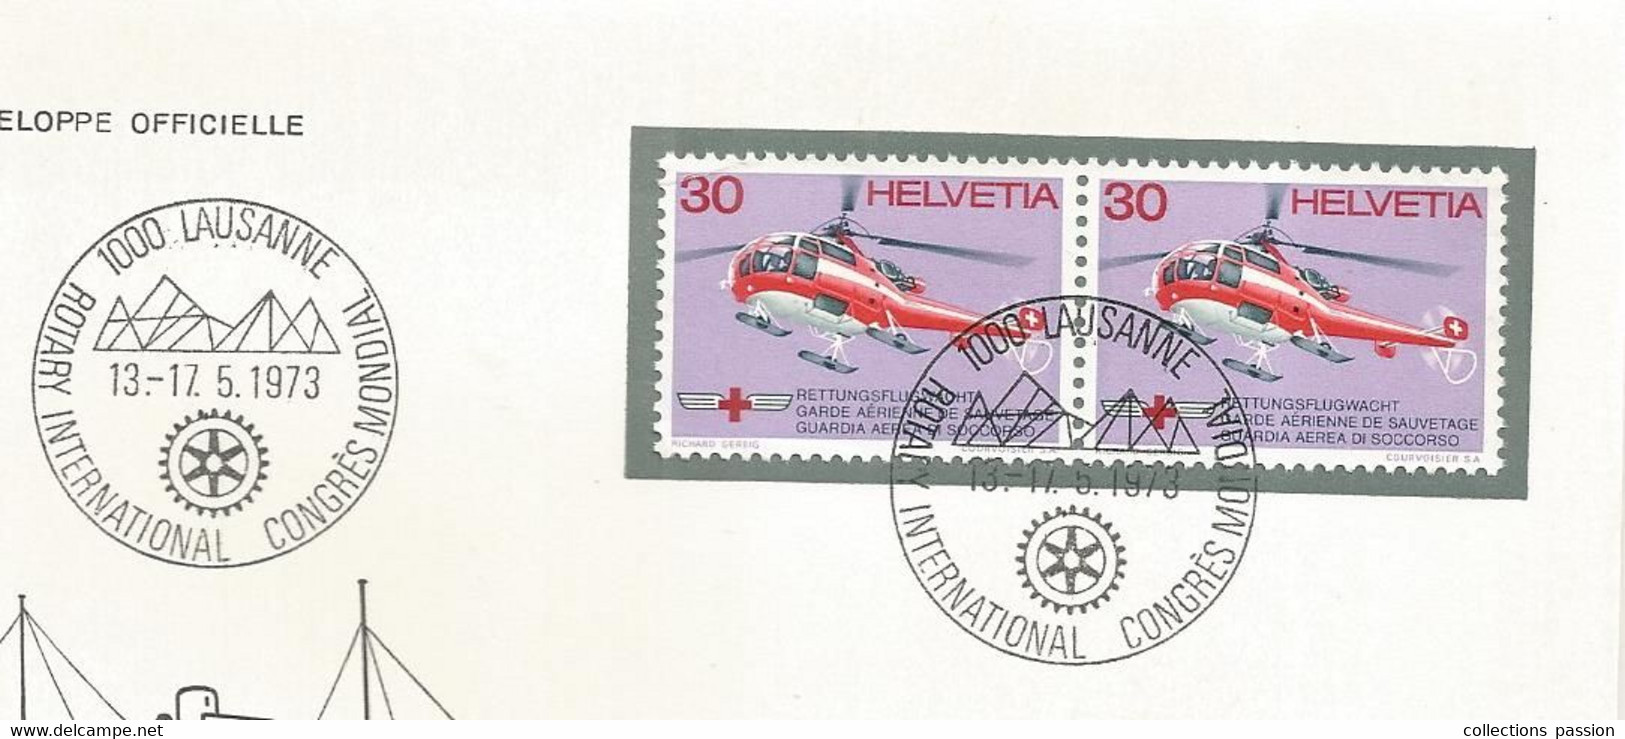 Lettre , SUISSE,LAUSANNE 1000,ROTARY INTERNATIONAL , CONGRES MONDIAL , 1973, Enveloppe Officielle, Bateau - Postmark Collection